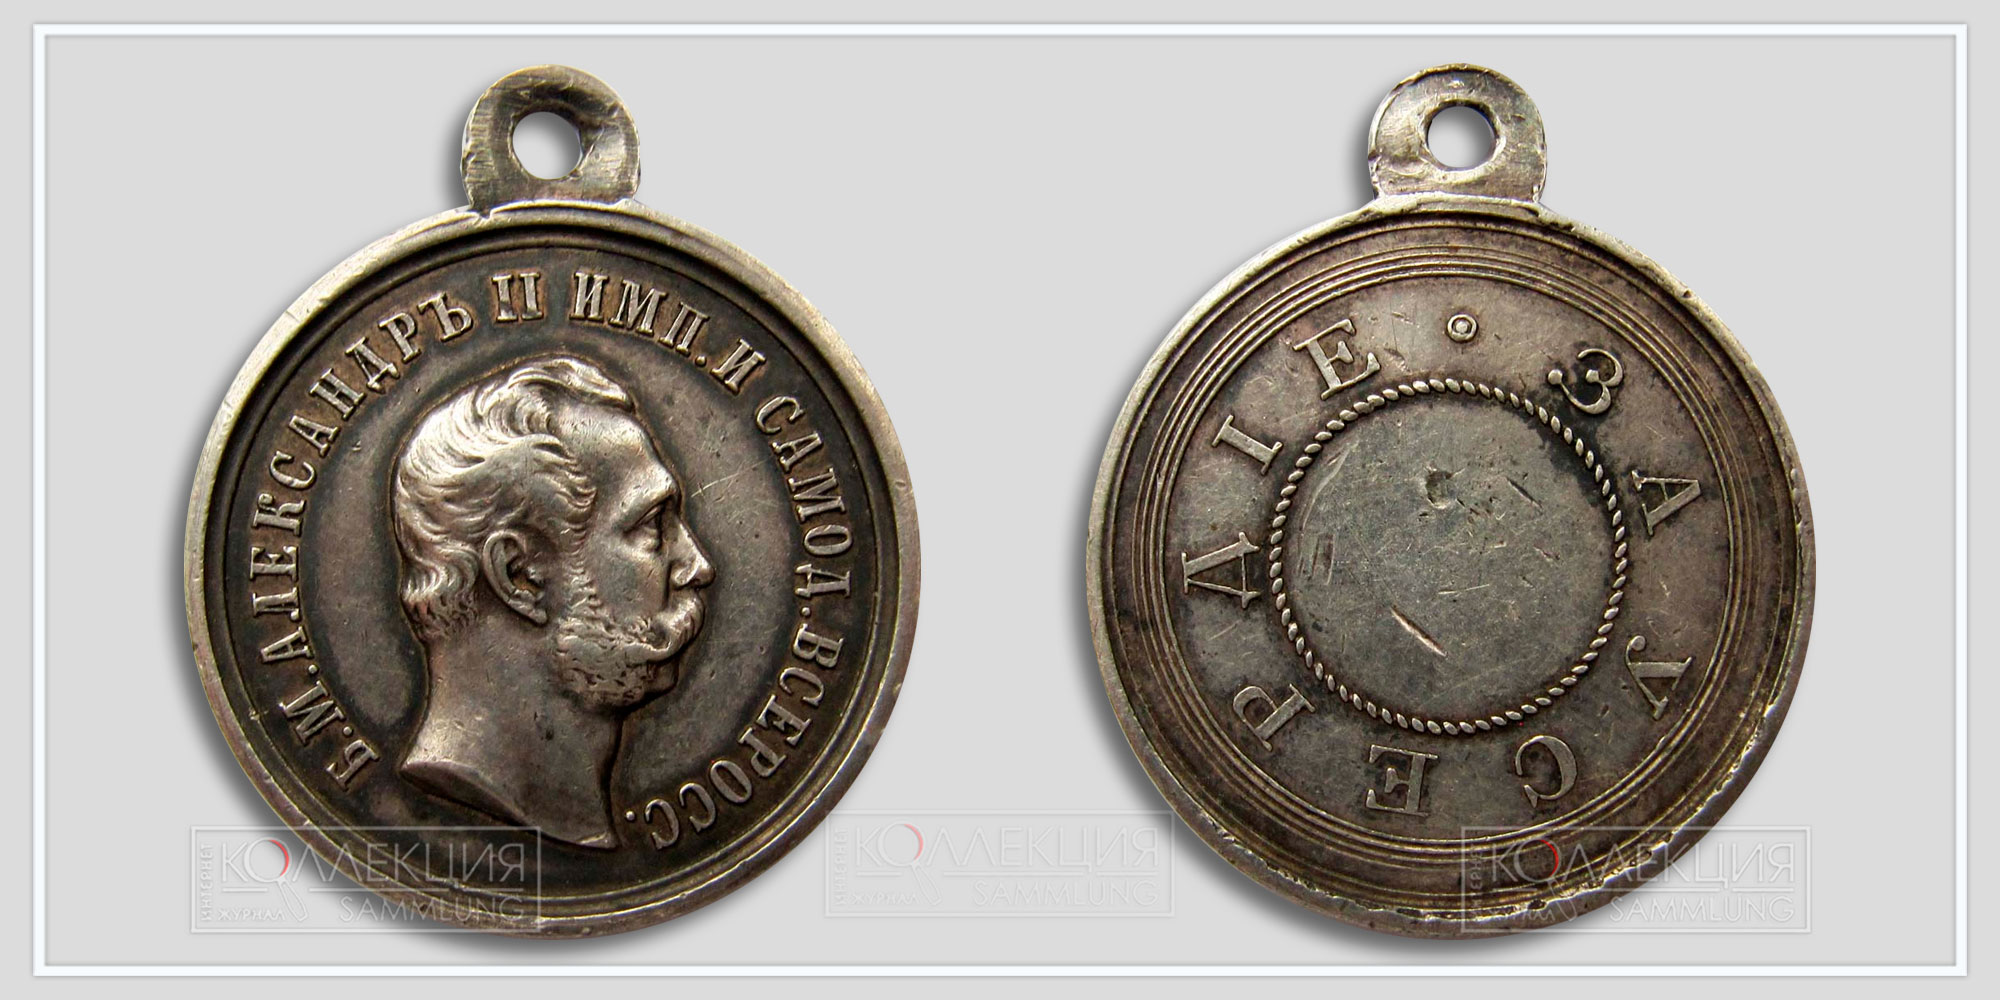 Медаль «За усердие» Александр II Серебро Портрет вправо Диаметр 29,0 мм Вес 10,0 г (Из архива Фалеристика.инфо. Разметил коллега Сибирякъ)